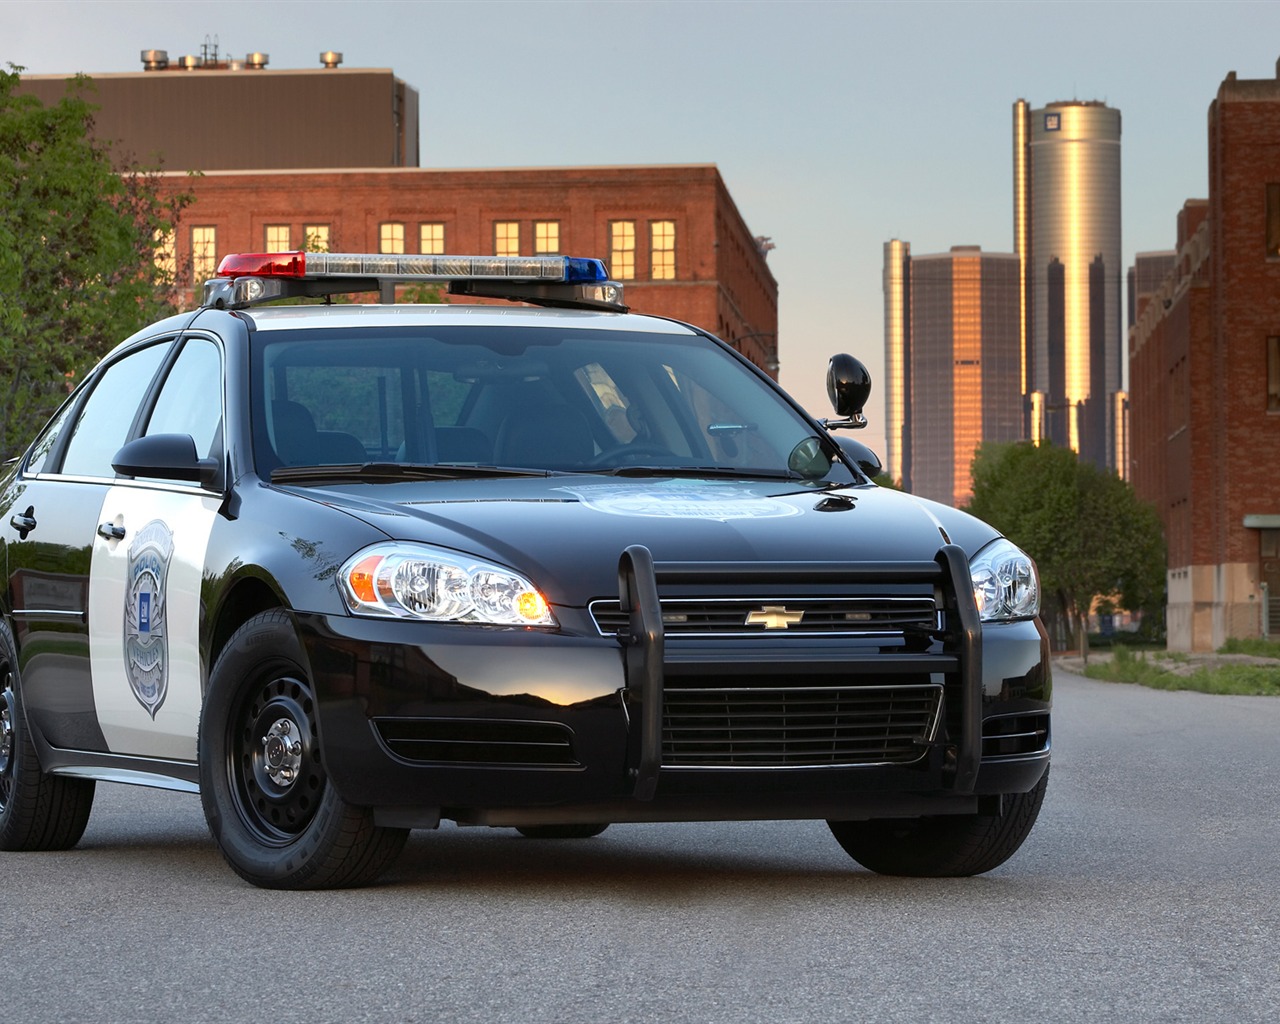 Chevrolet Impala Police Vehicle - 2011 雪佛兰3 - 1280x1024